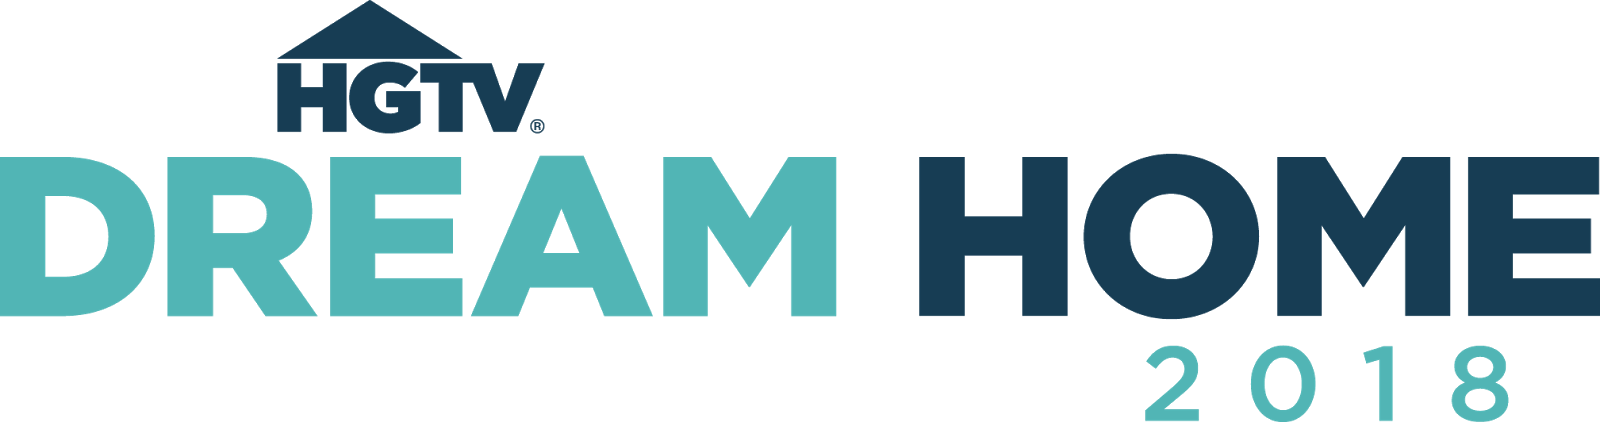 Hgtv Dream Home - Hgtv Dream Home Logo Clipart (1600x422), Png Download